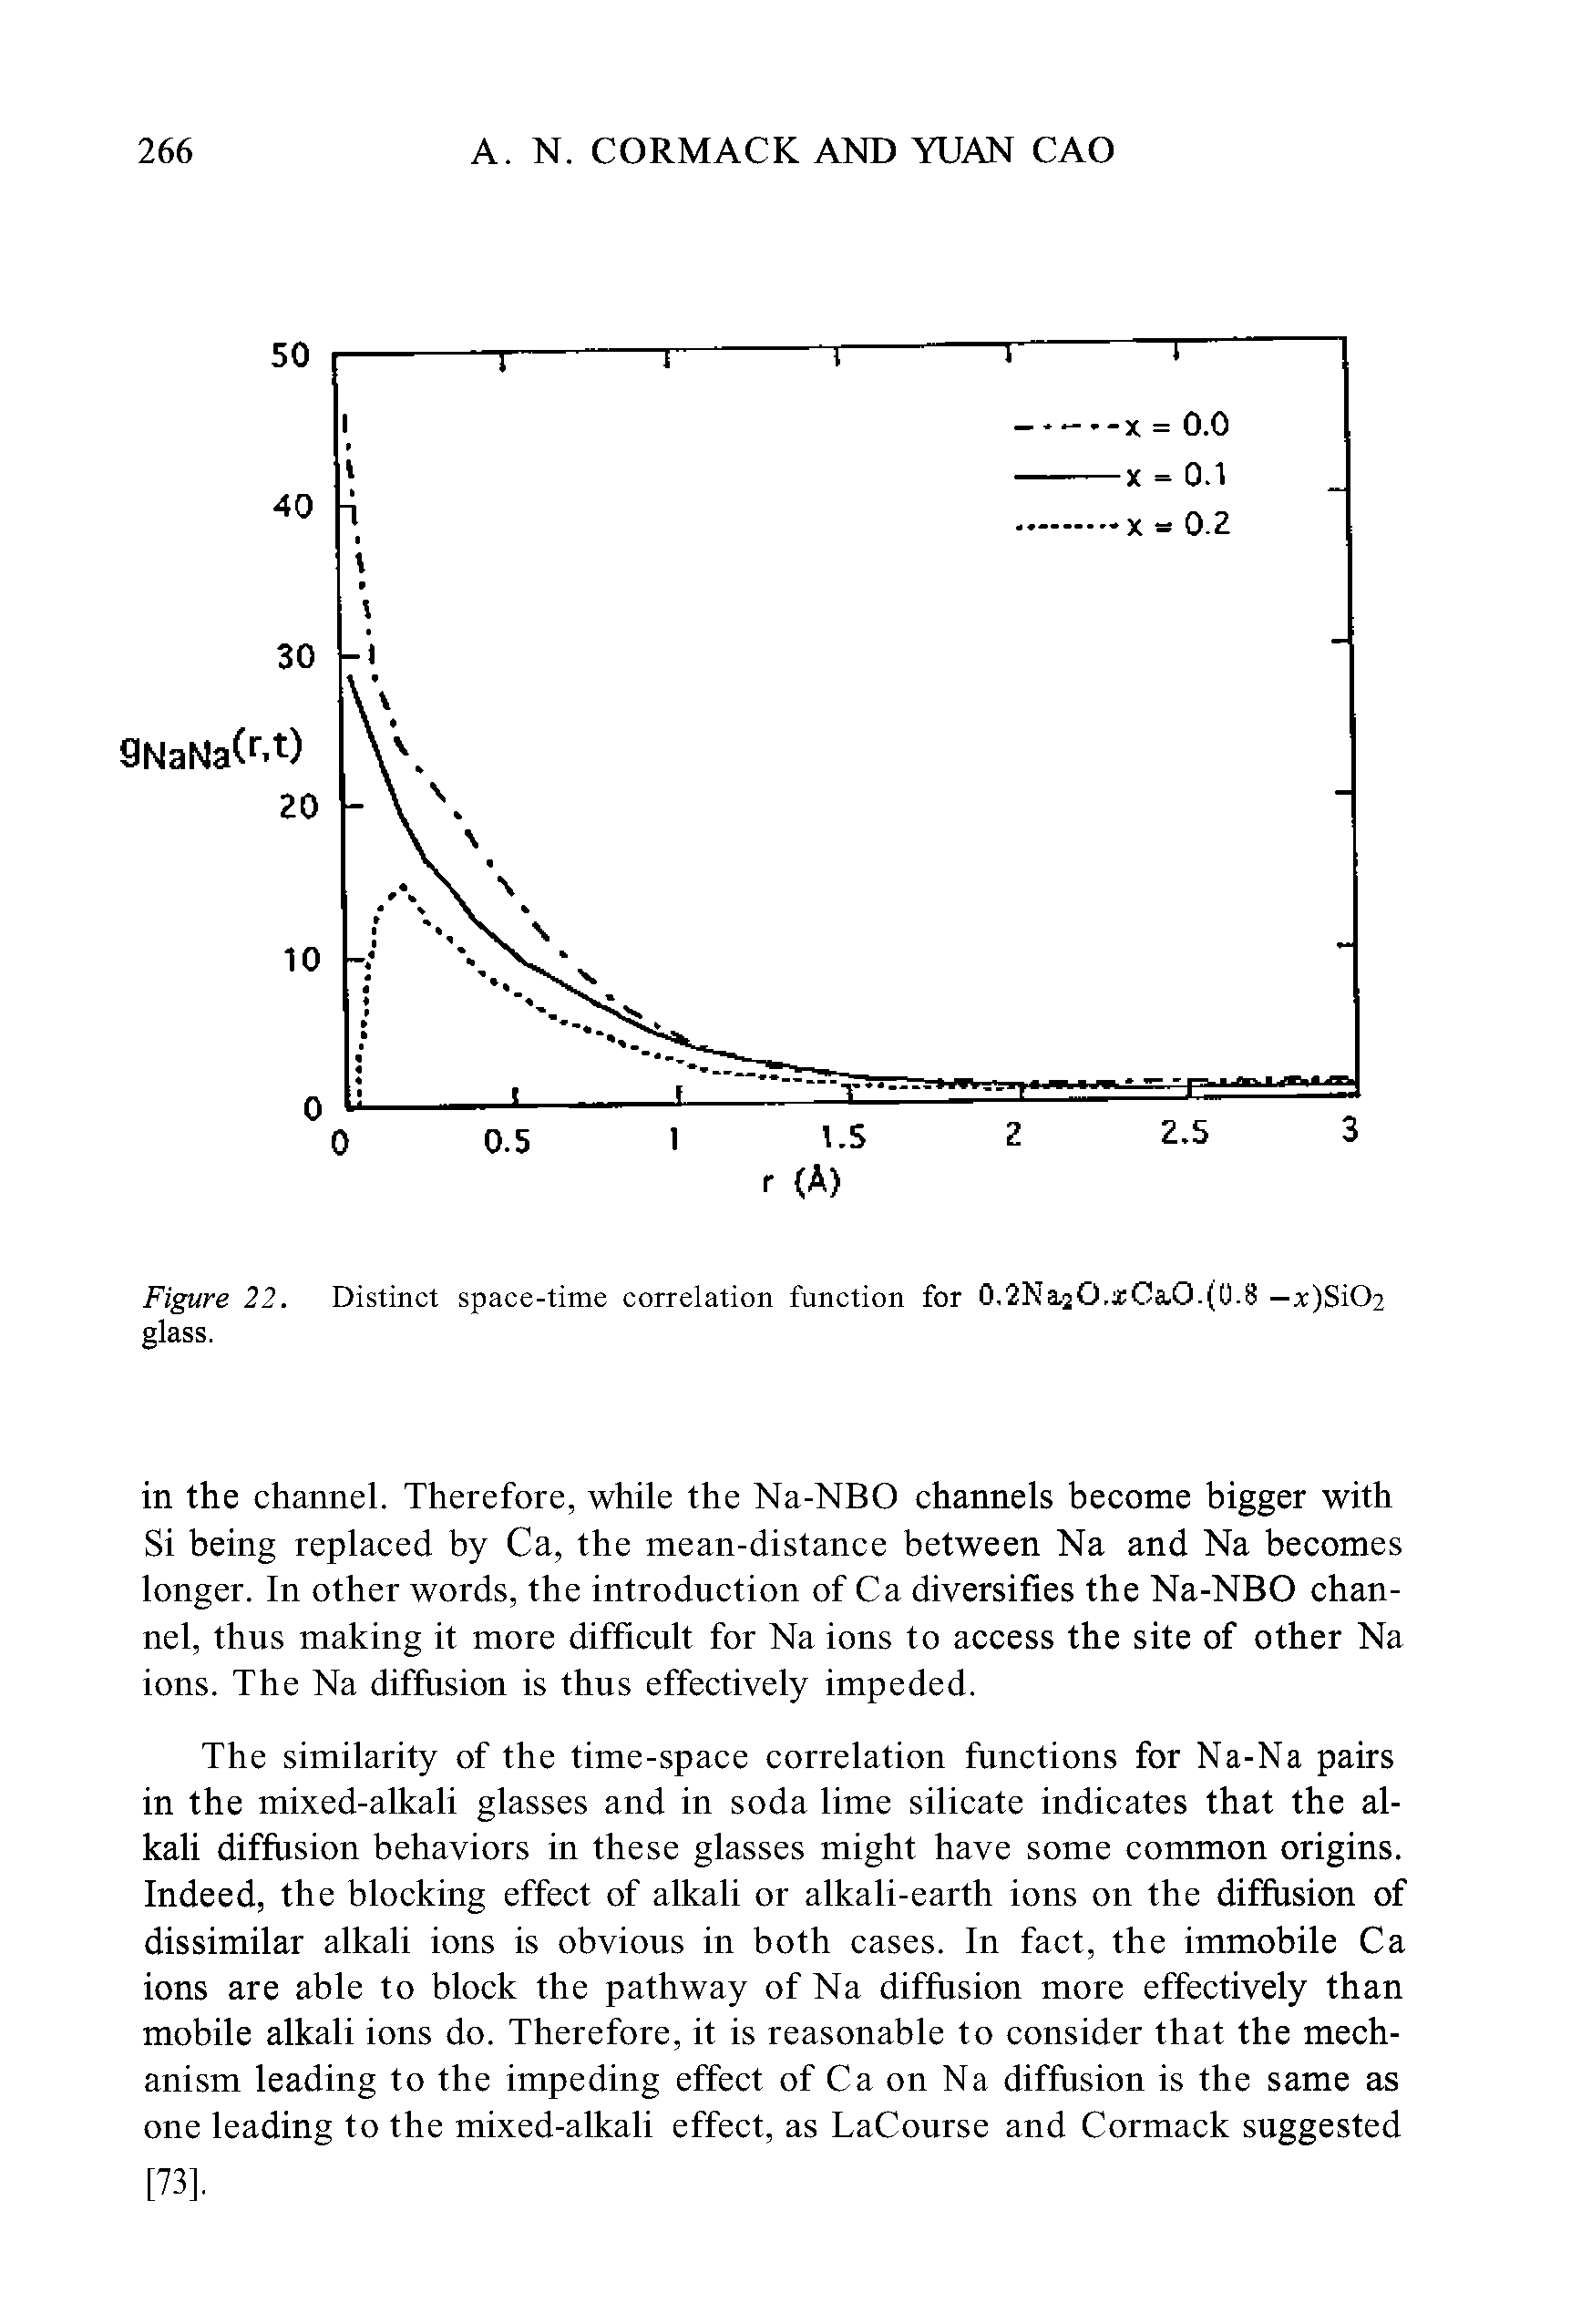 Figure 22. Distinct space-time correlation function for 0,2Na,2O, cOa,O.(0.8 —x)Si02 glass.